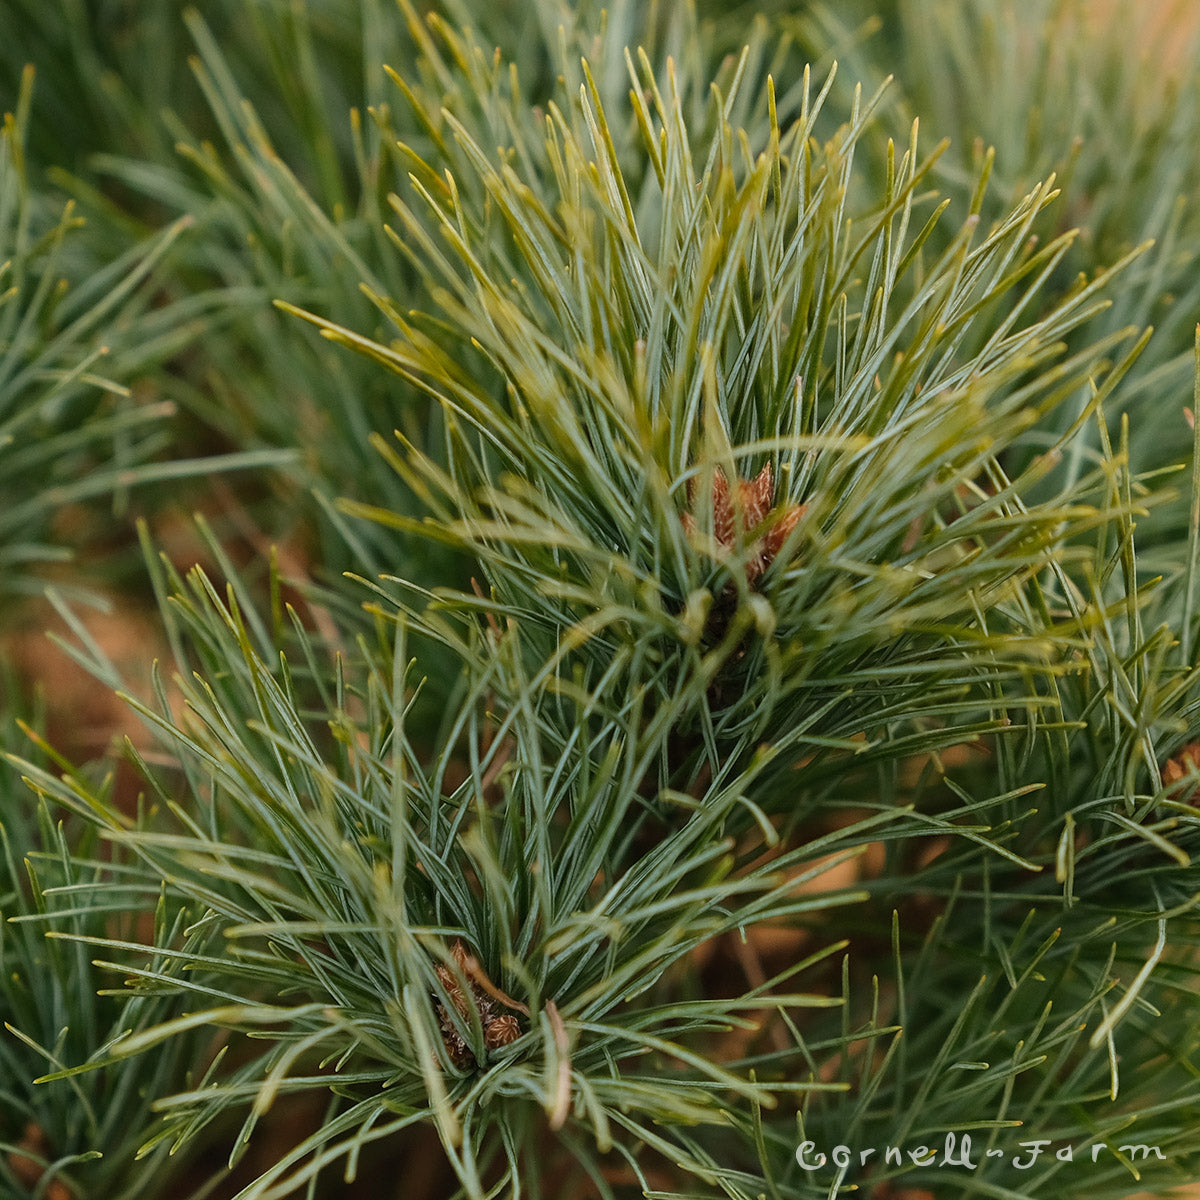 Pinus strobus Sea Urchin 1gal 6-9in Eastern White Pine